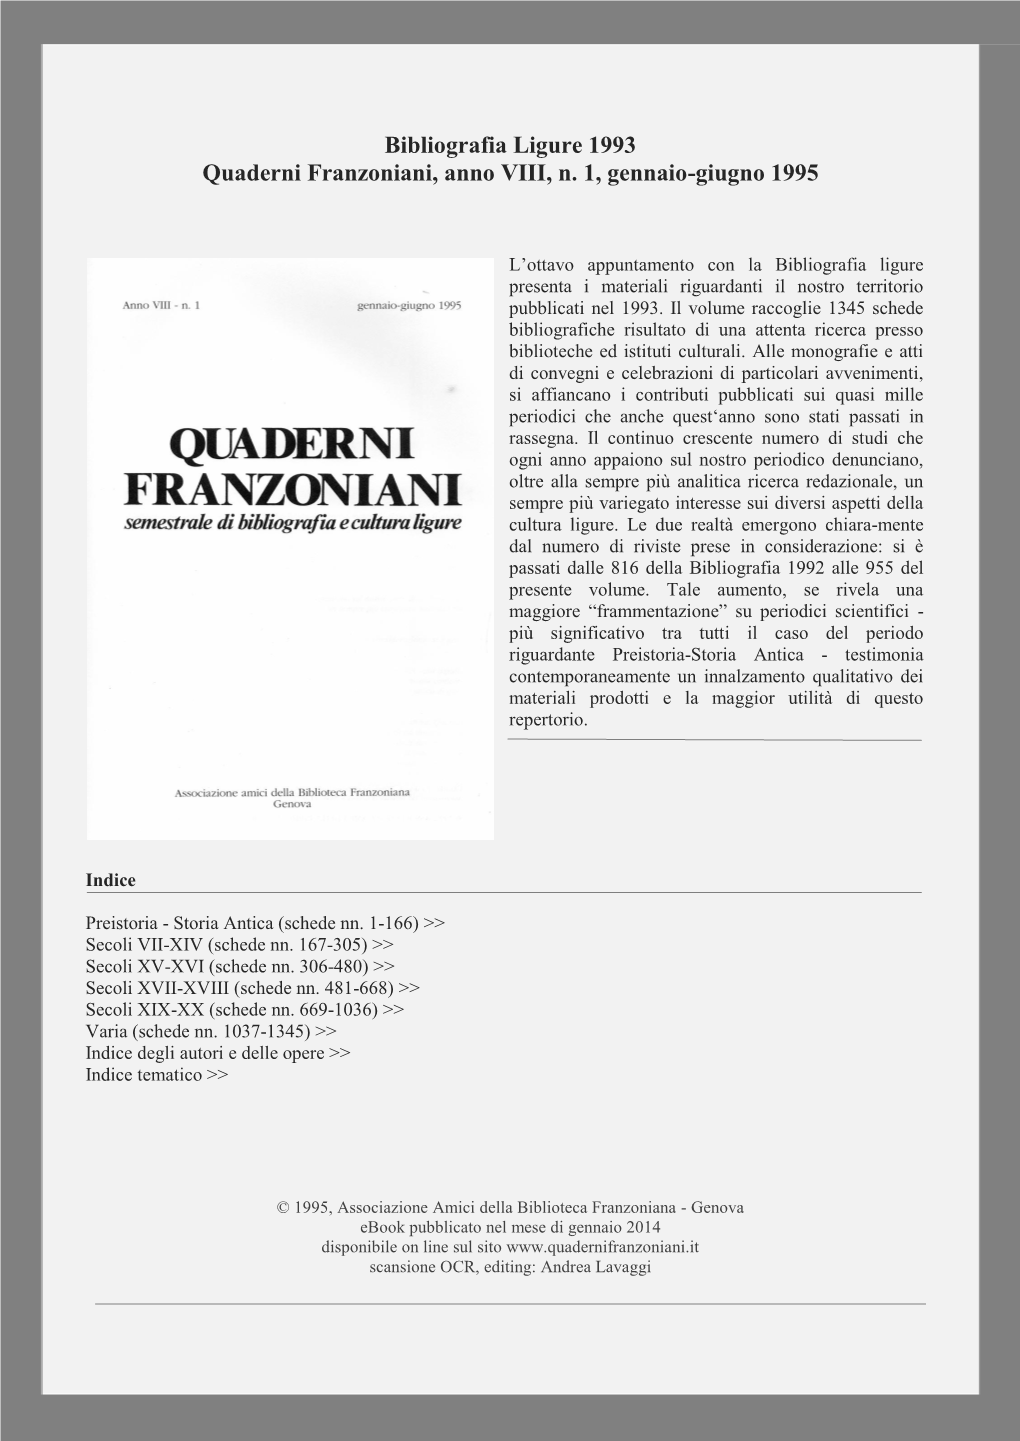 Guarda La Bibliografia Ligure 1993 on Line